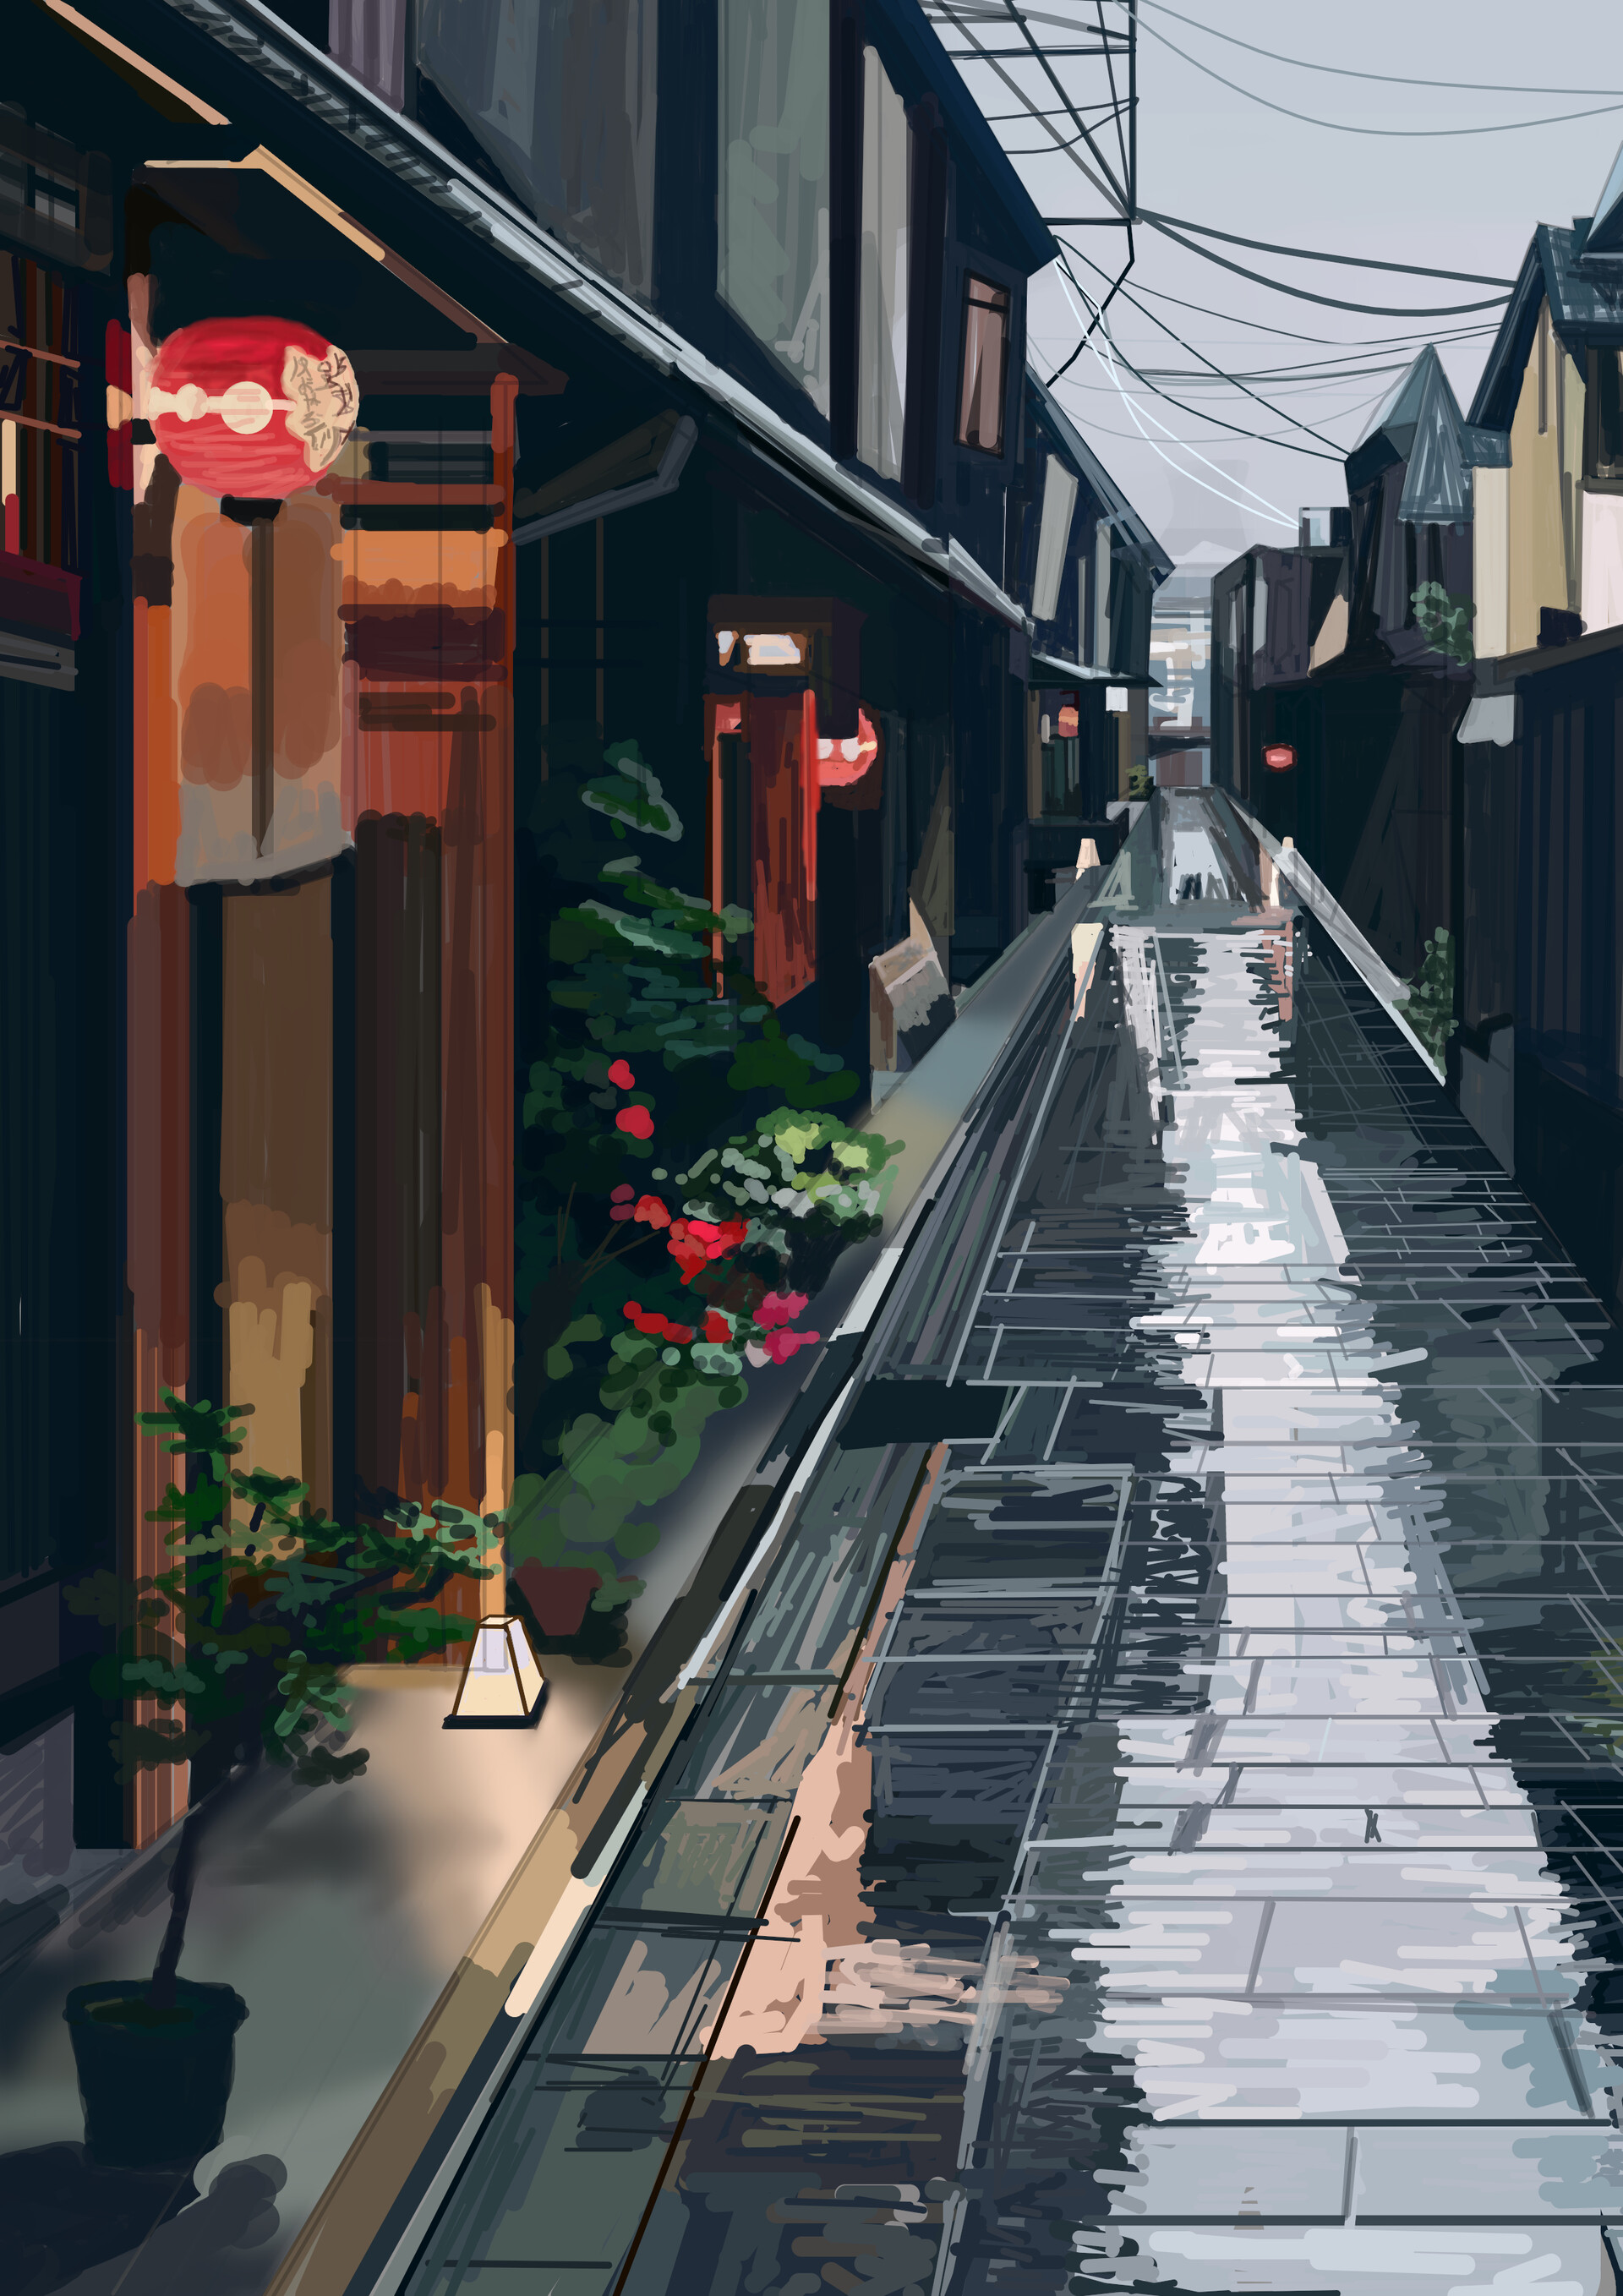 ArtStation - Rainy Street in Japan